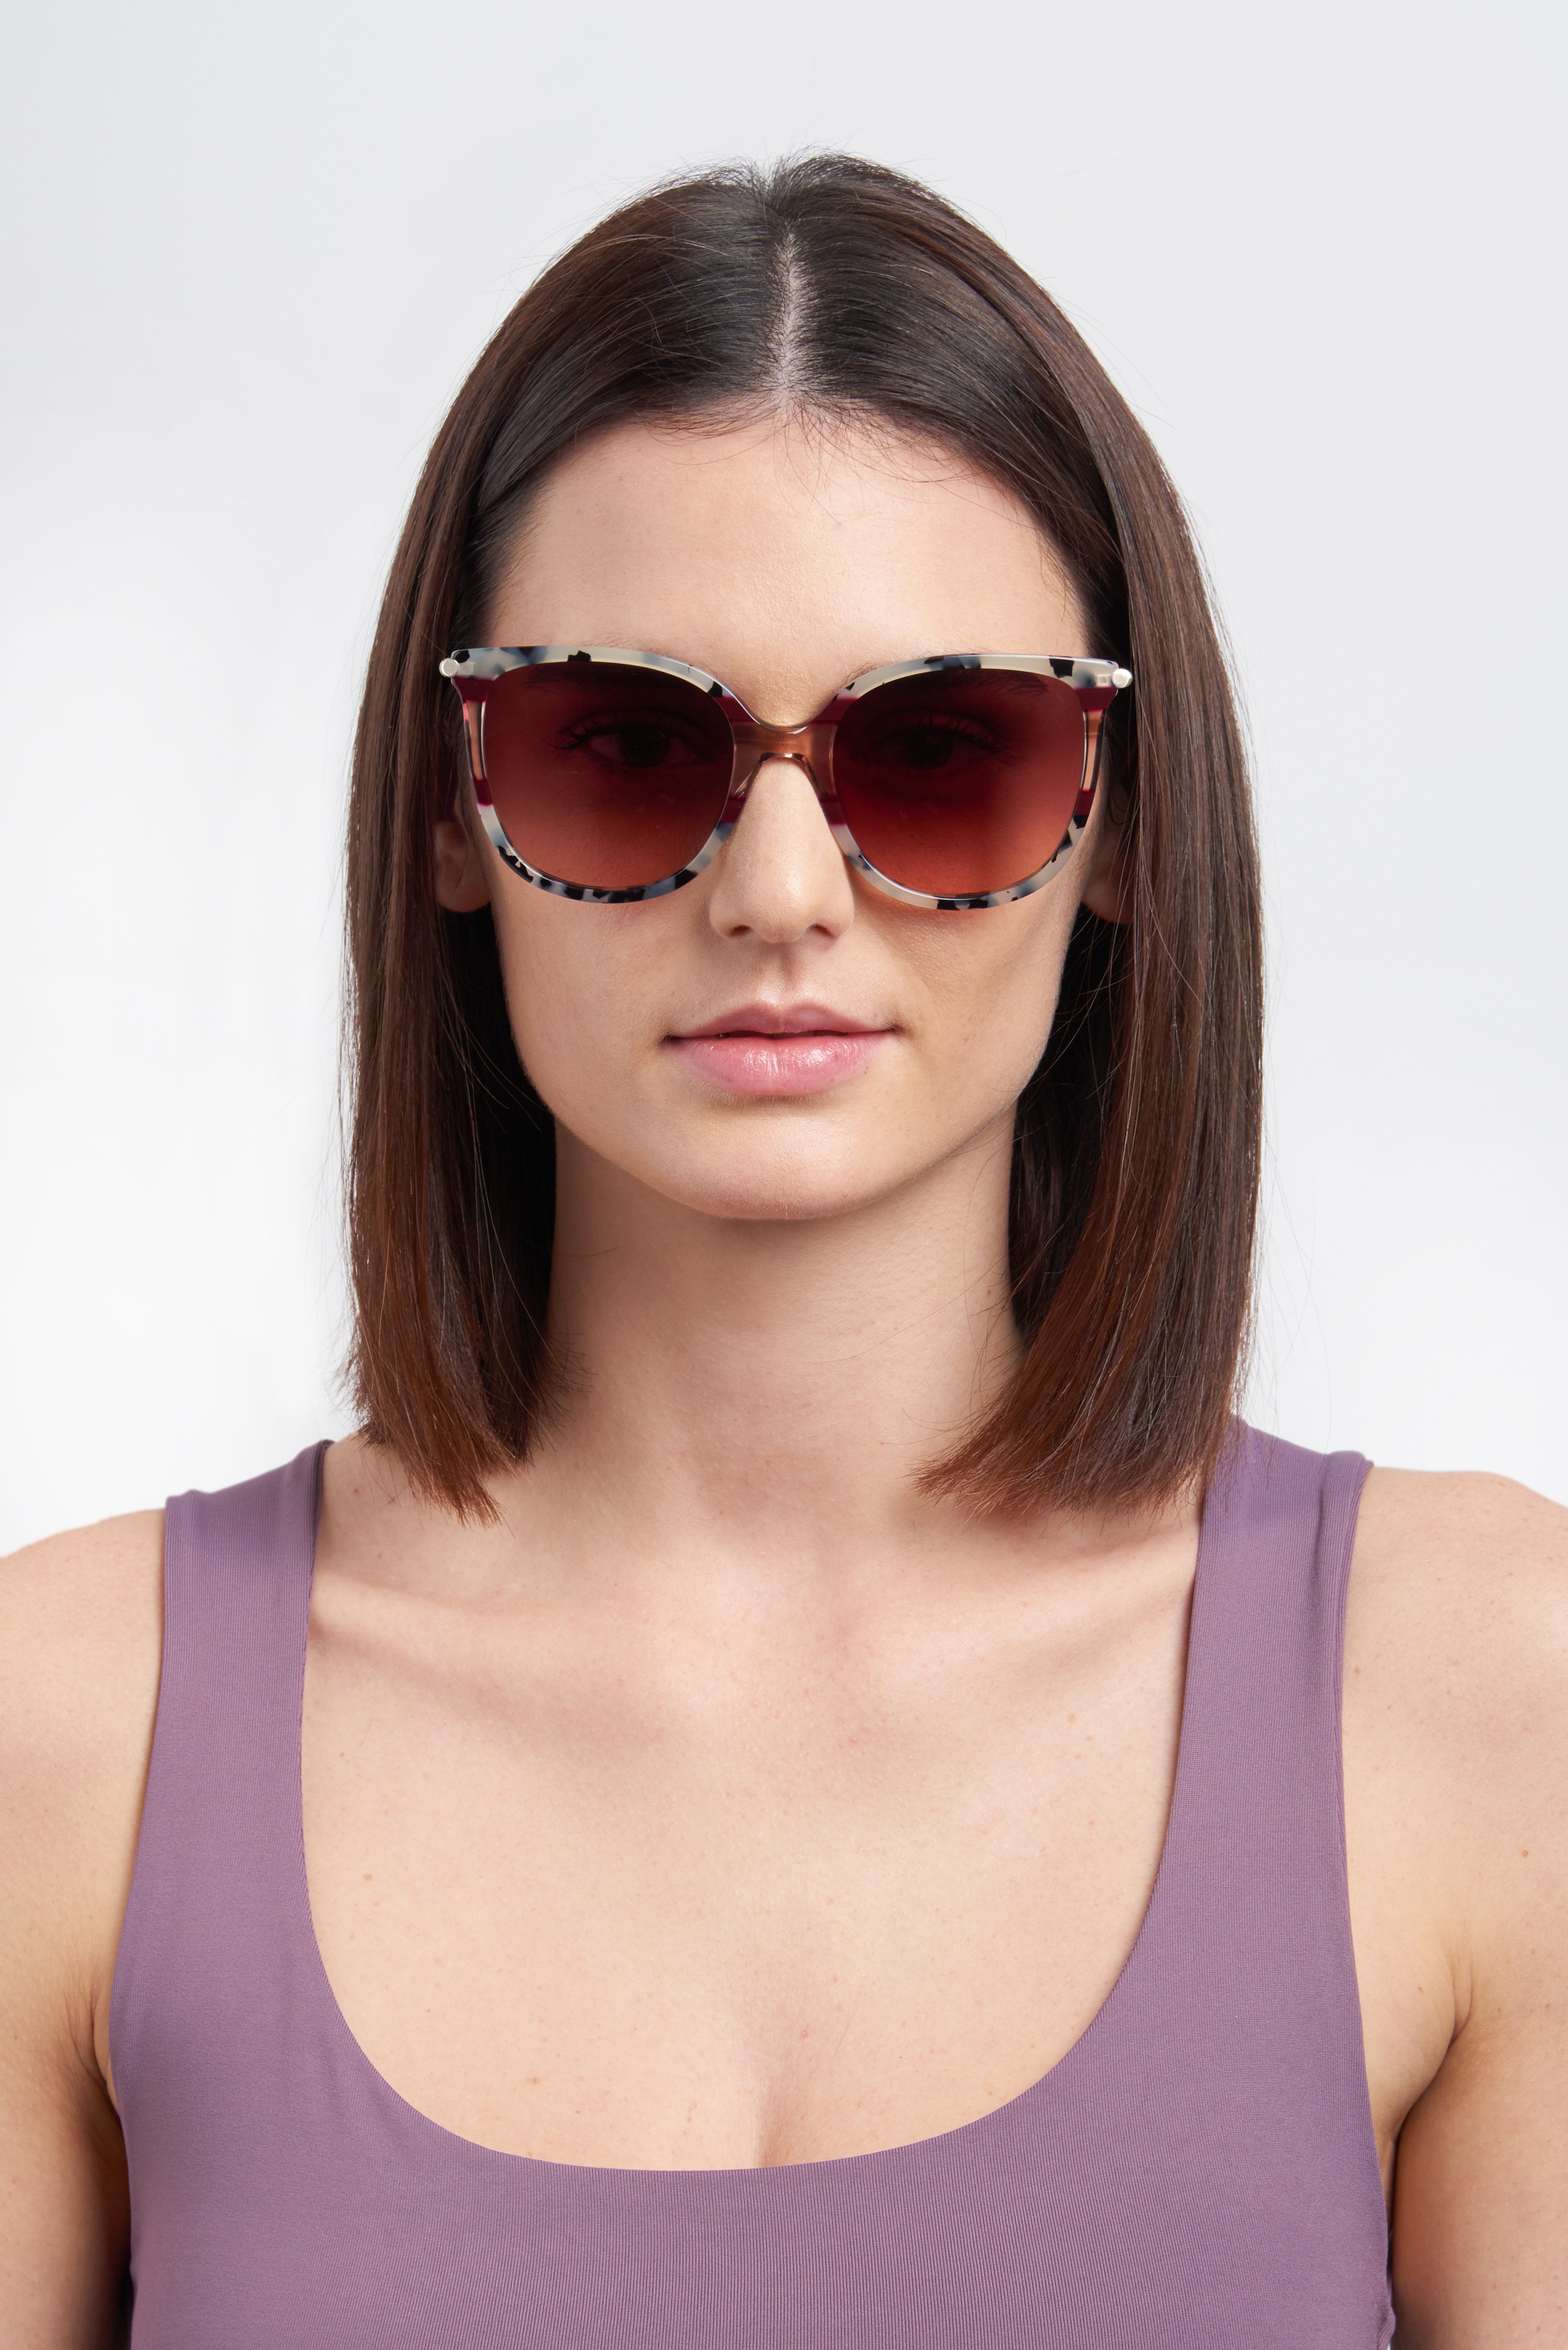 Carolina Herrera Round Sunglasses